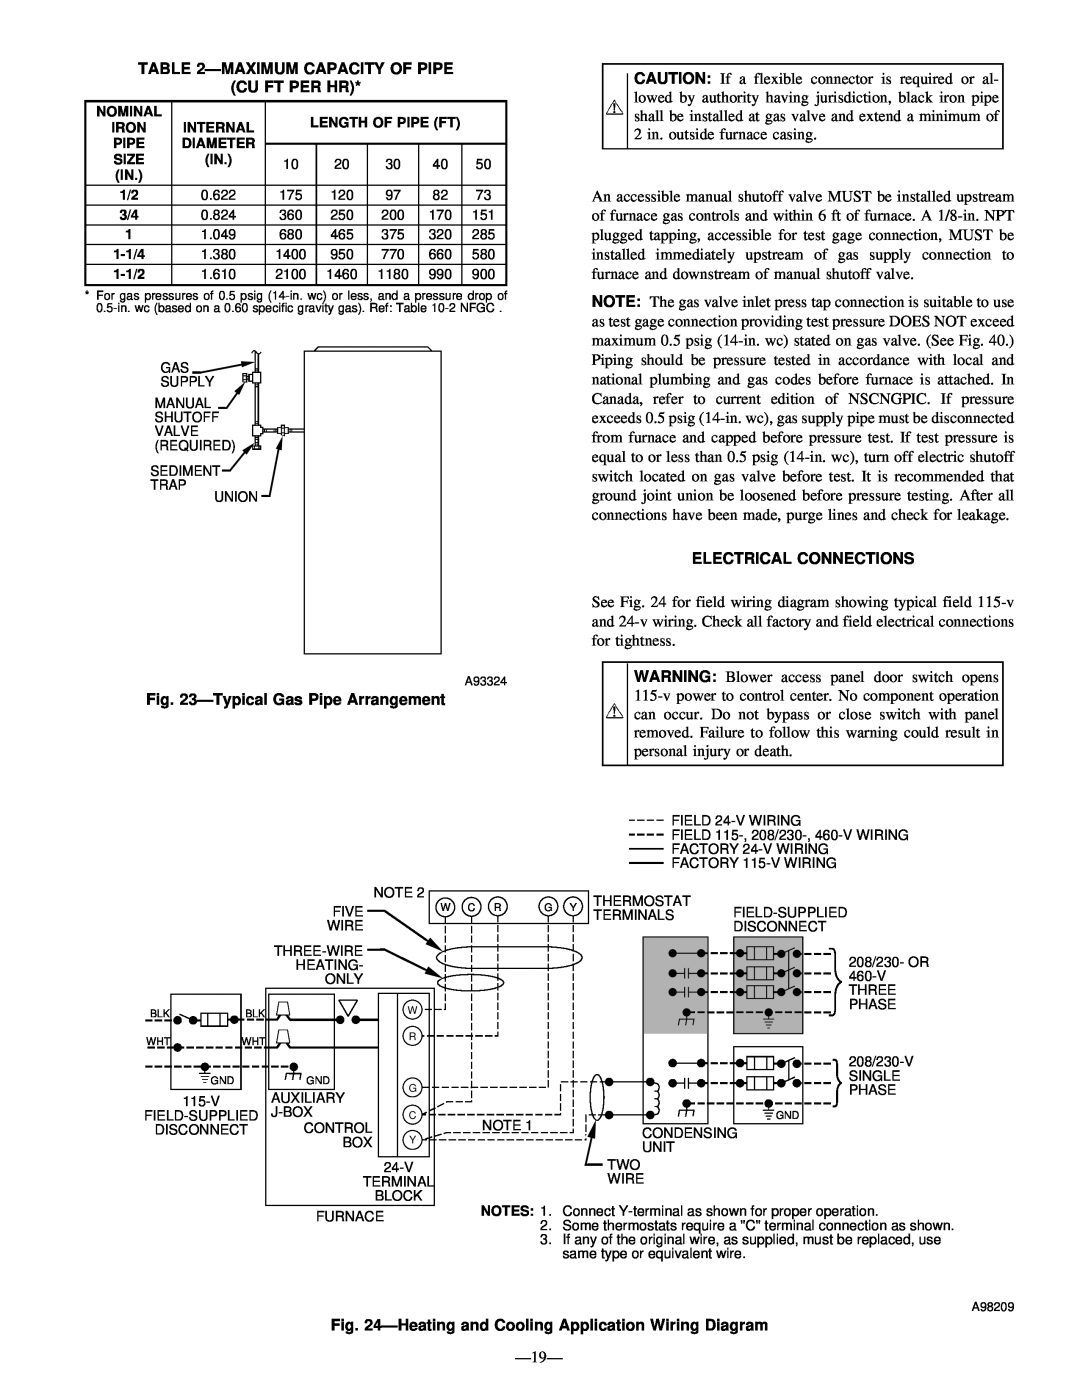 Bryant 345MAV Ðmaximum Capacity Of Pipe Cu Ft Per Hr, ÐTypical Gas Pipe Arrangement, Electrical Connections 